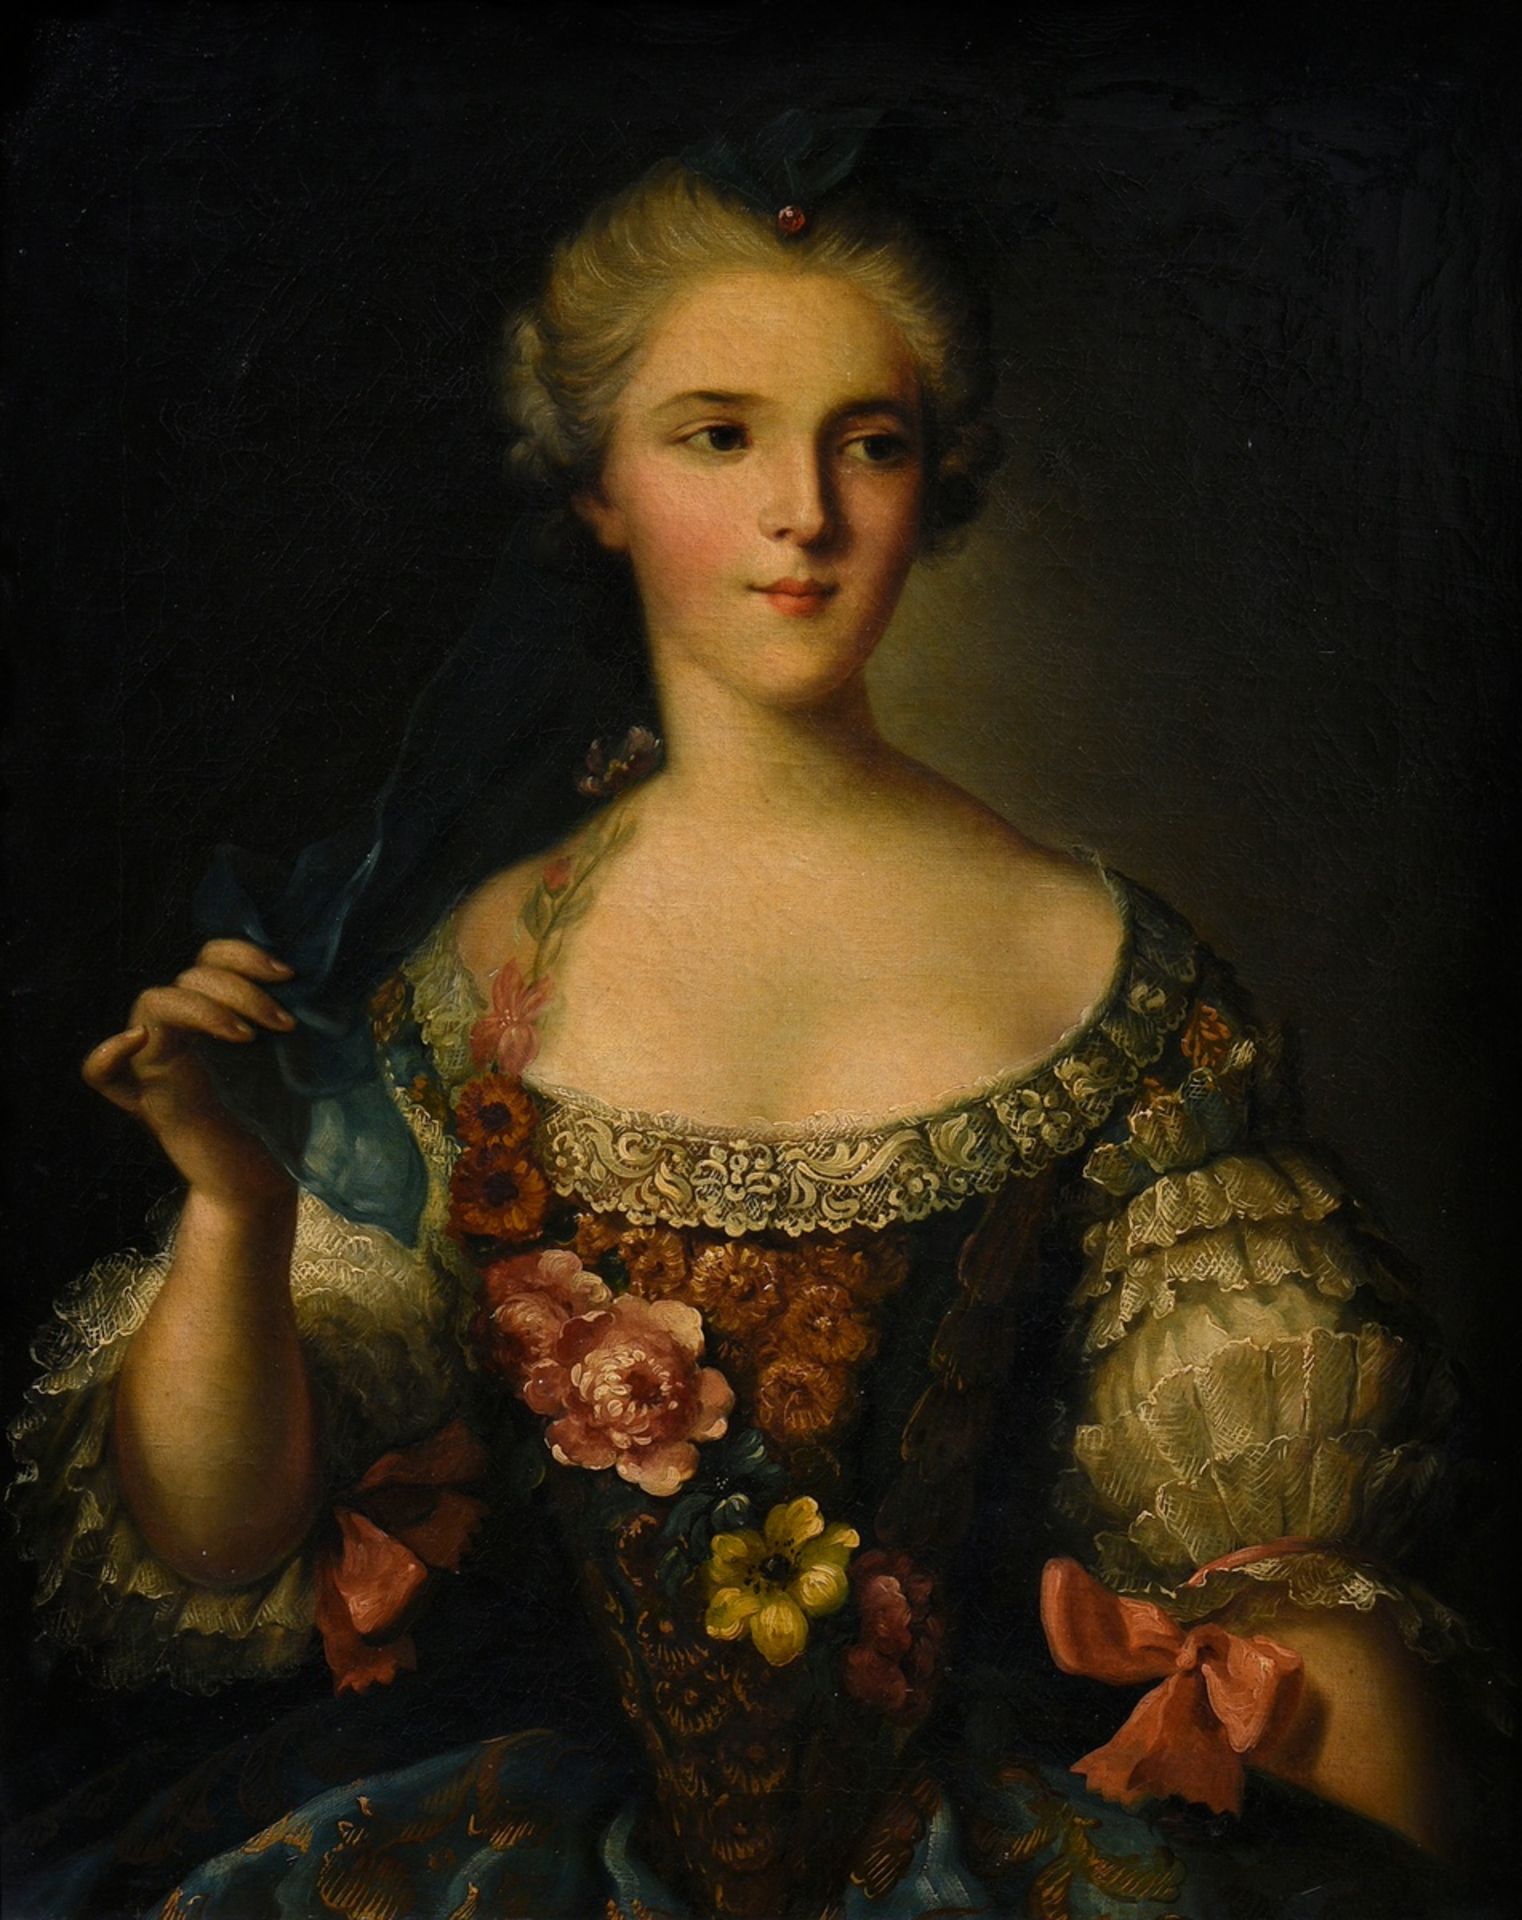 Unknown painter of the 18th c. after Jean-Marc Nattier (1685-1766) "Portrait Madame Sophie" (Prince